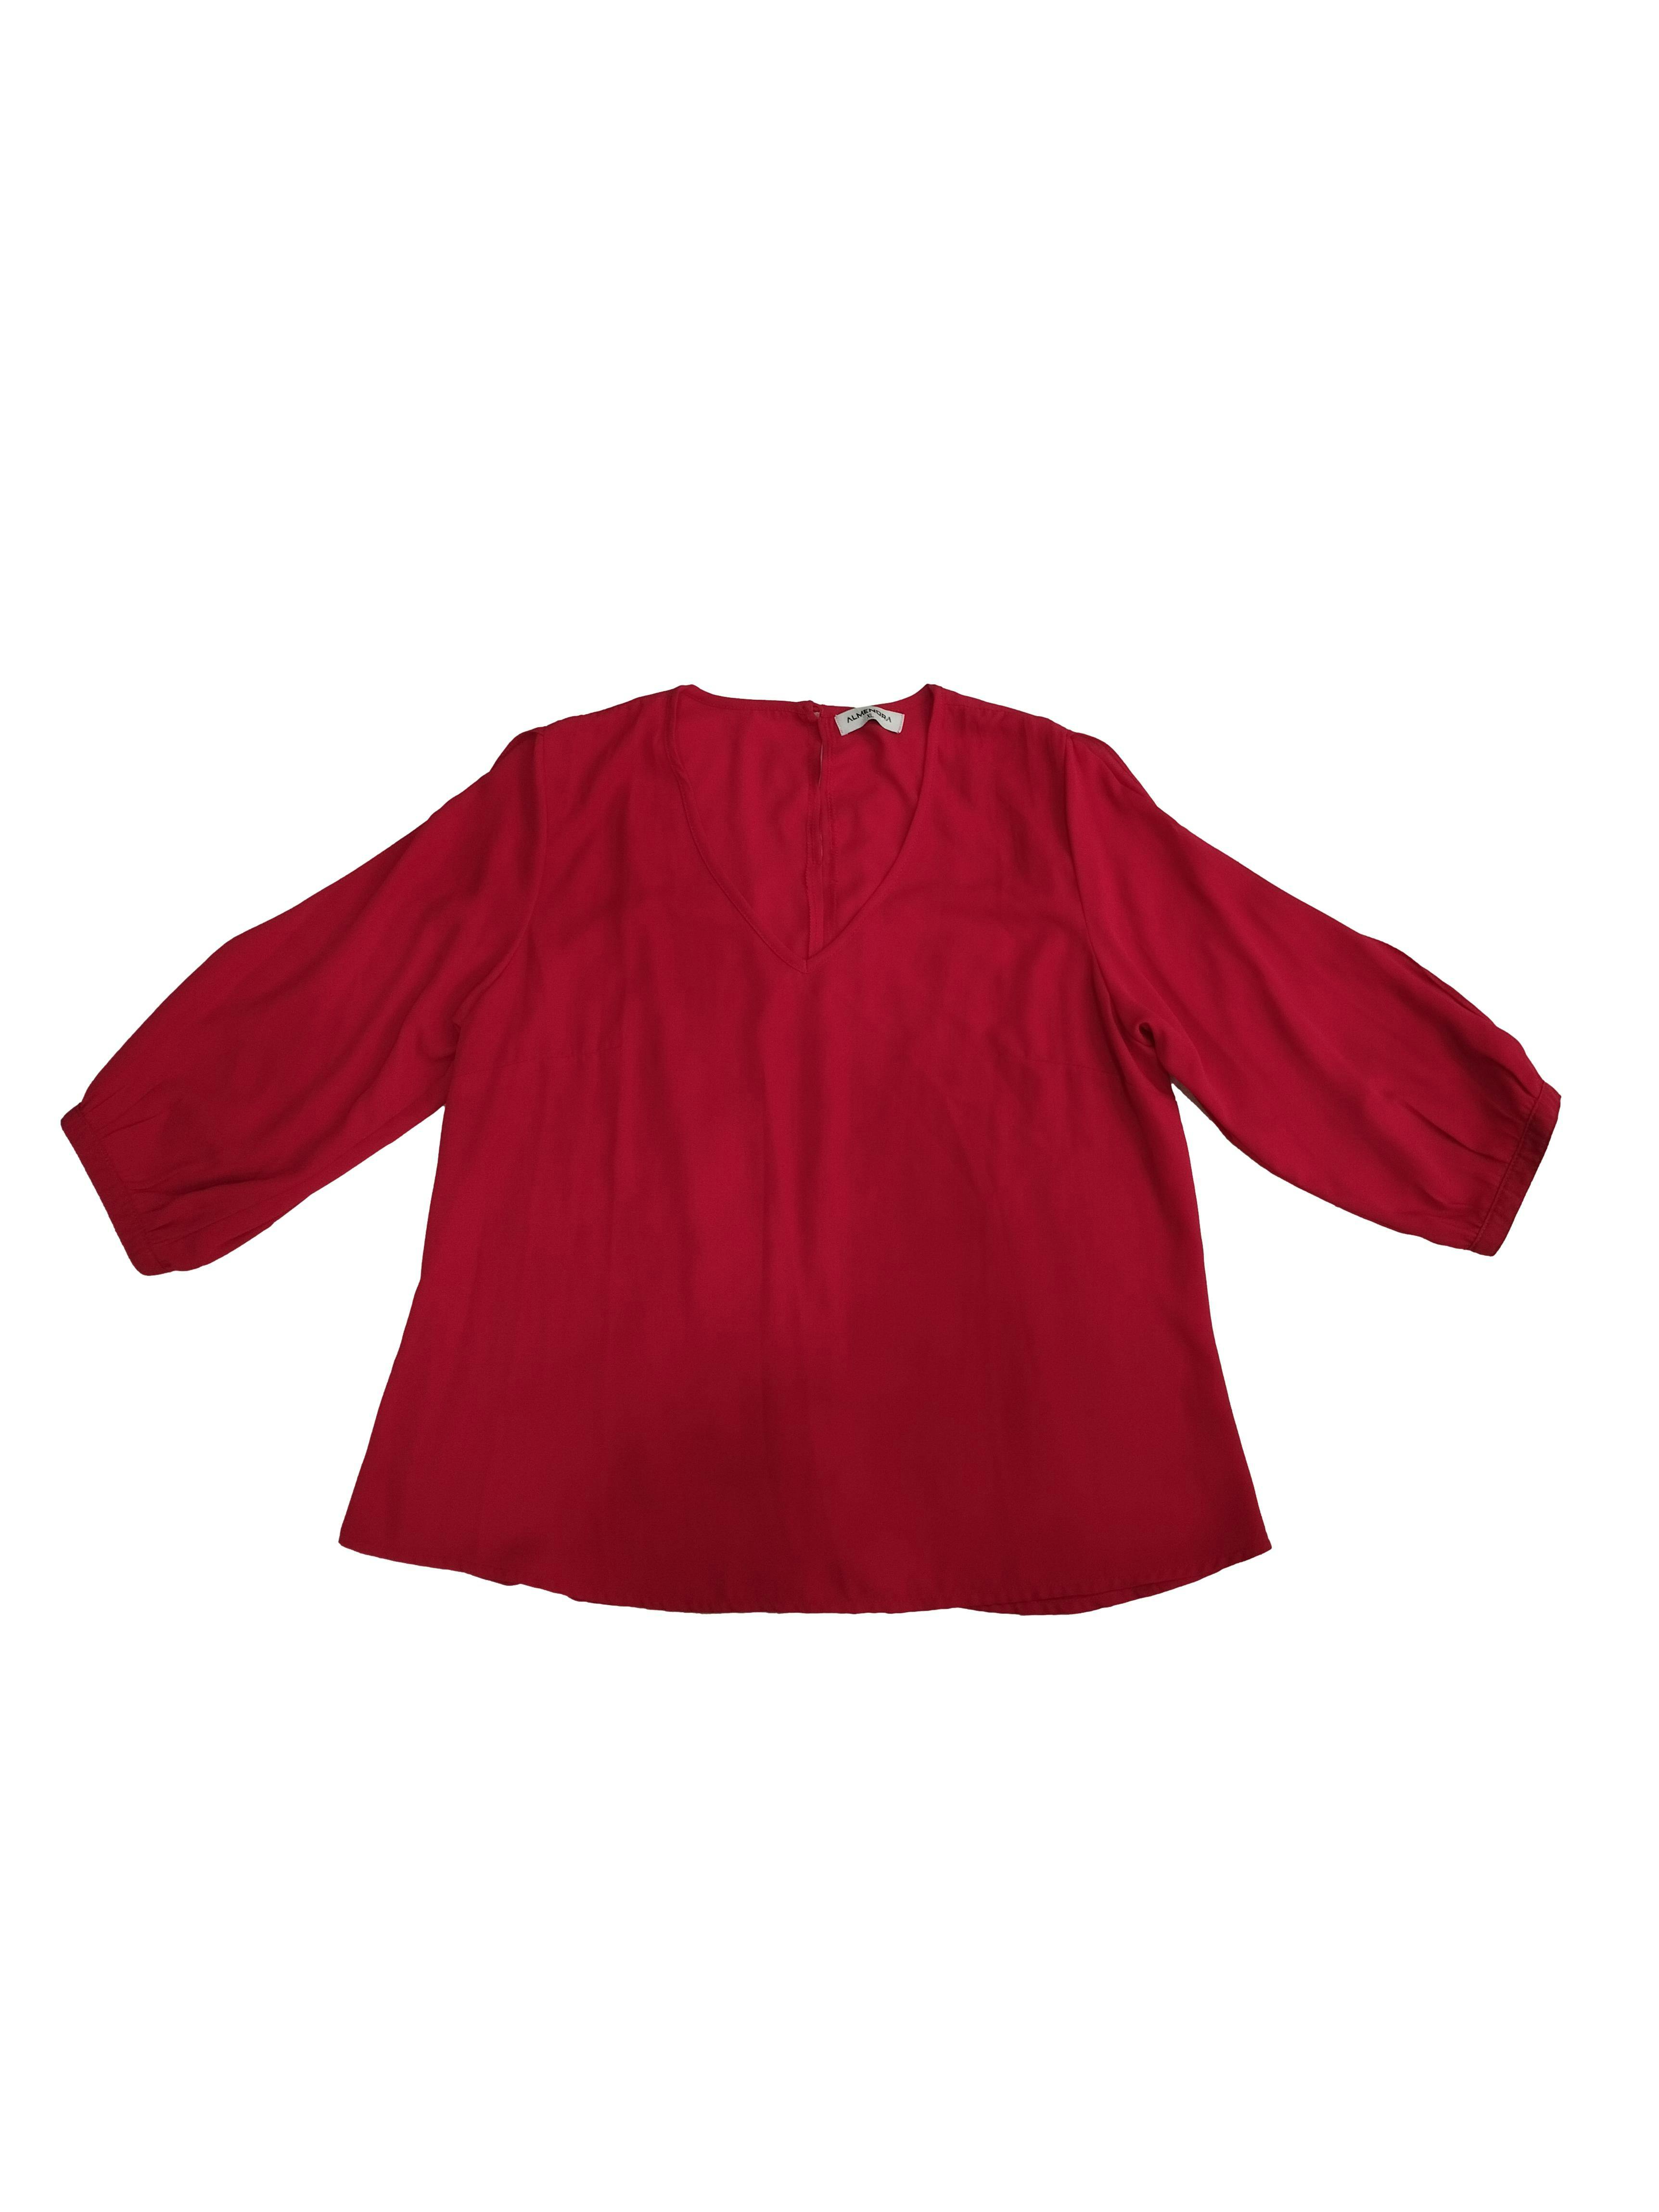 Blusa Almendra de gasa roja, mangas 3/4, botón posterior, cuello en V. Busto: 112 cm, Largo: 66 cm